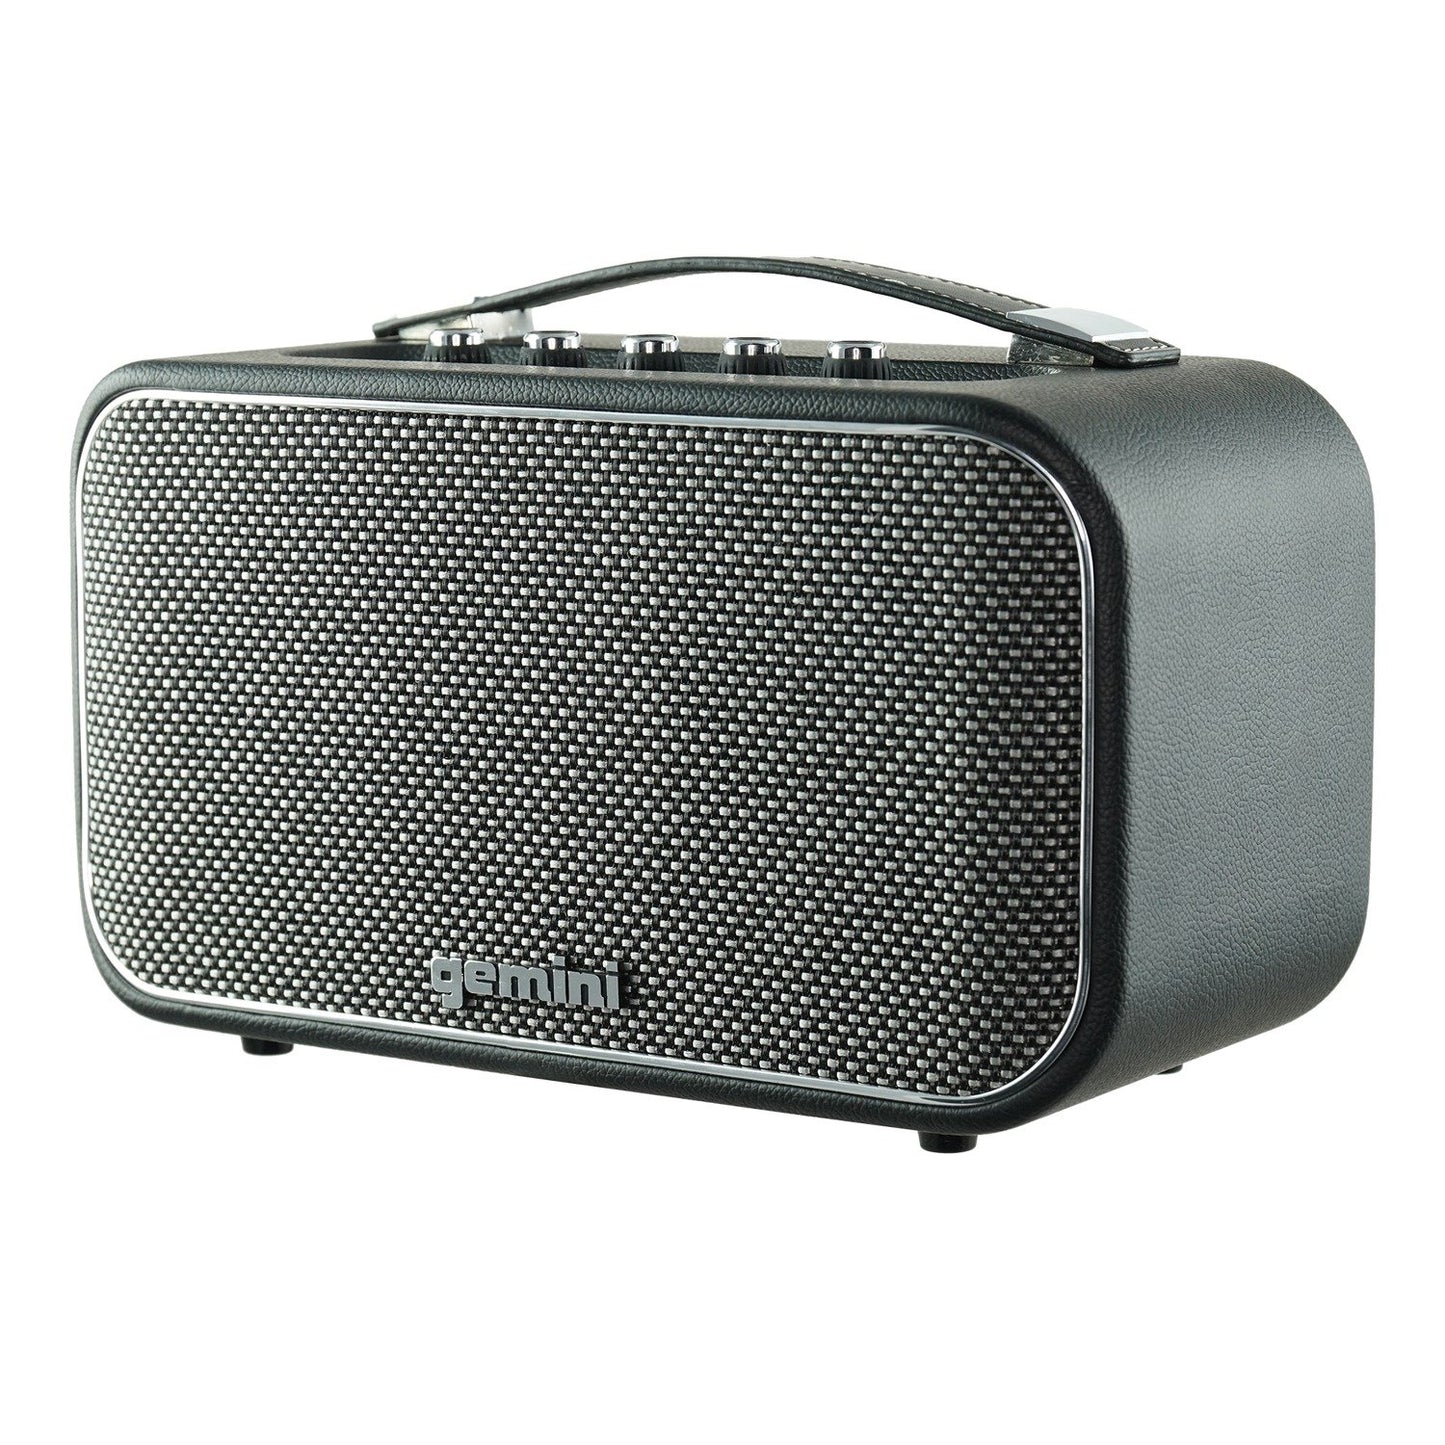 Gemini GTR-300 Portable Bluetooth Speaker